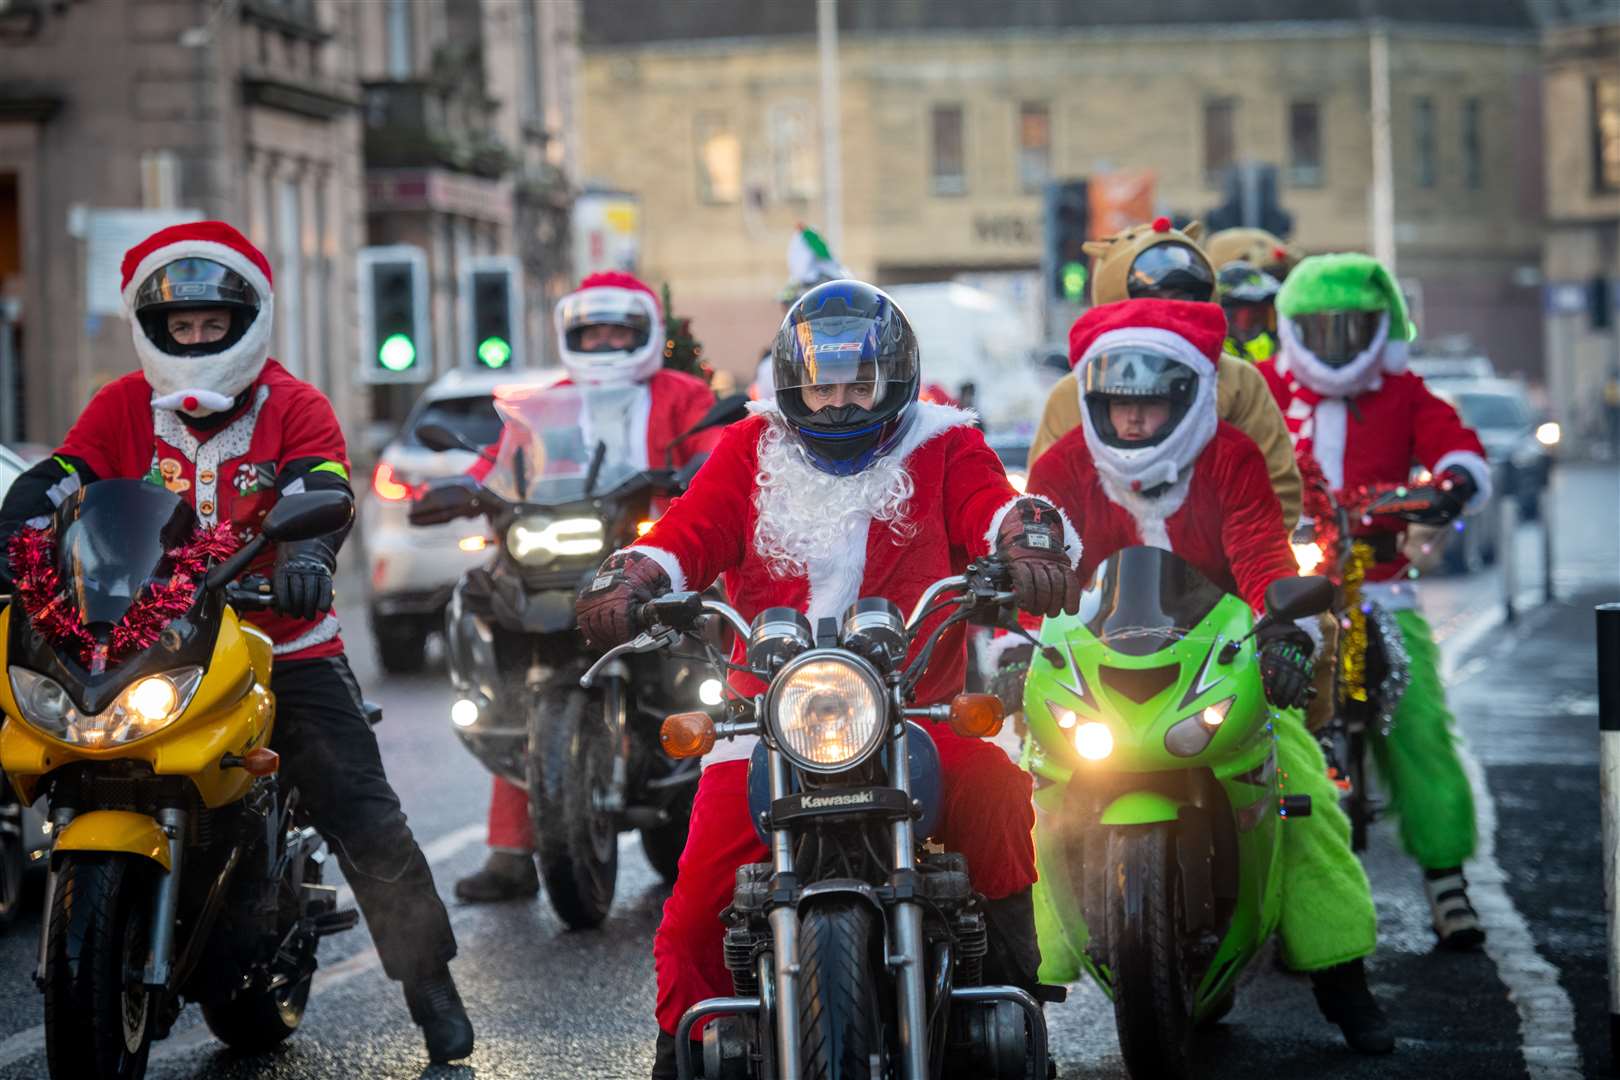 Santa Run on motorcycles raising funds for MFR Cash4kids. Picture: Callum Mackay..